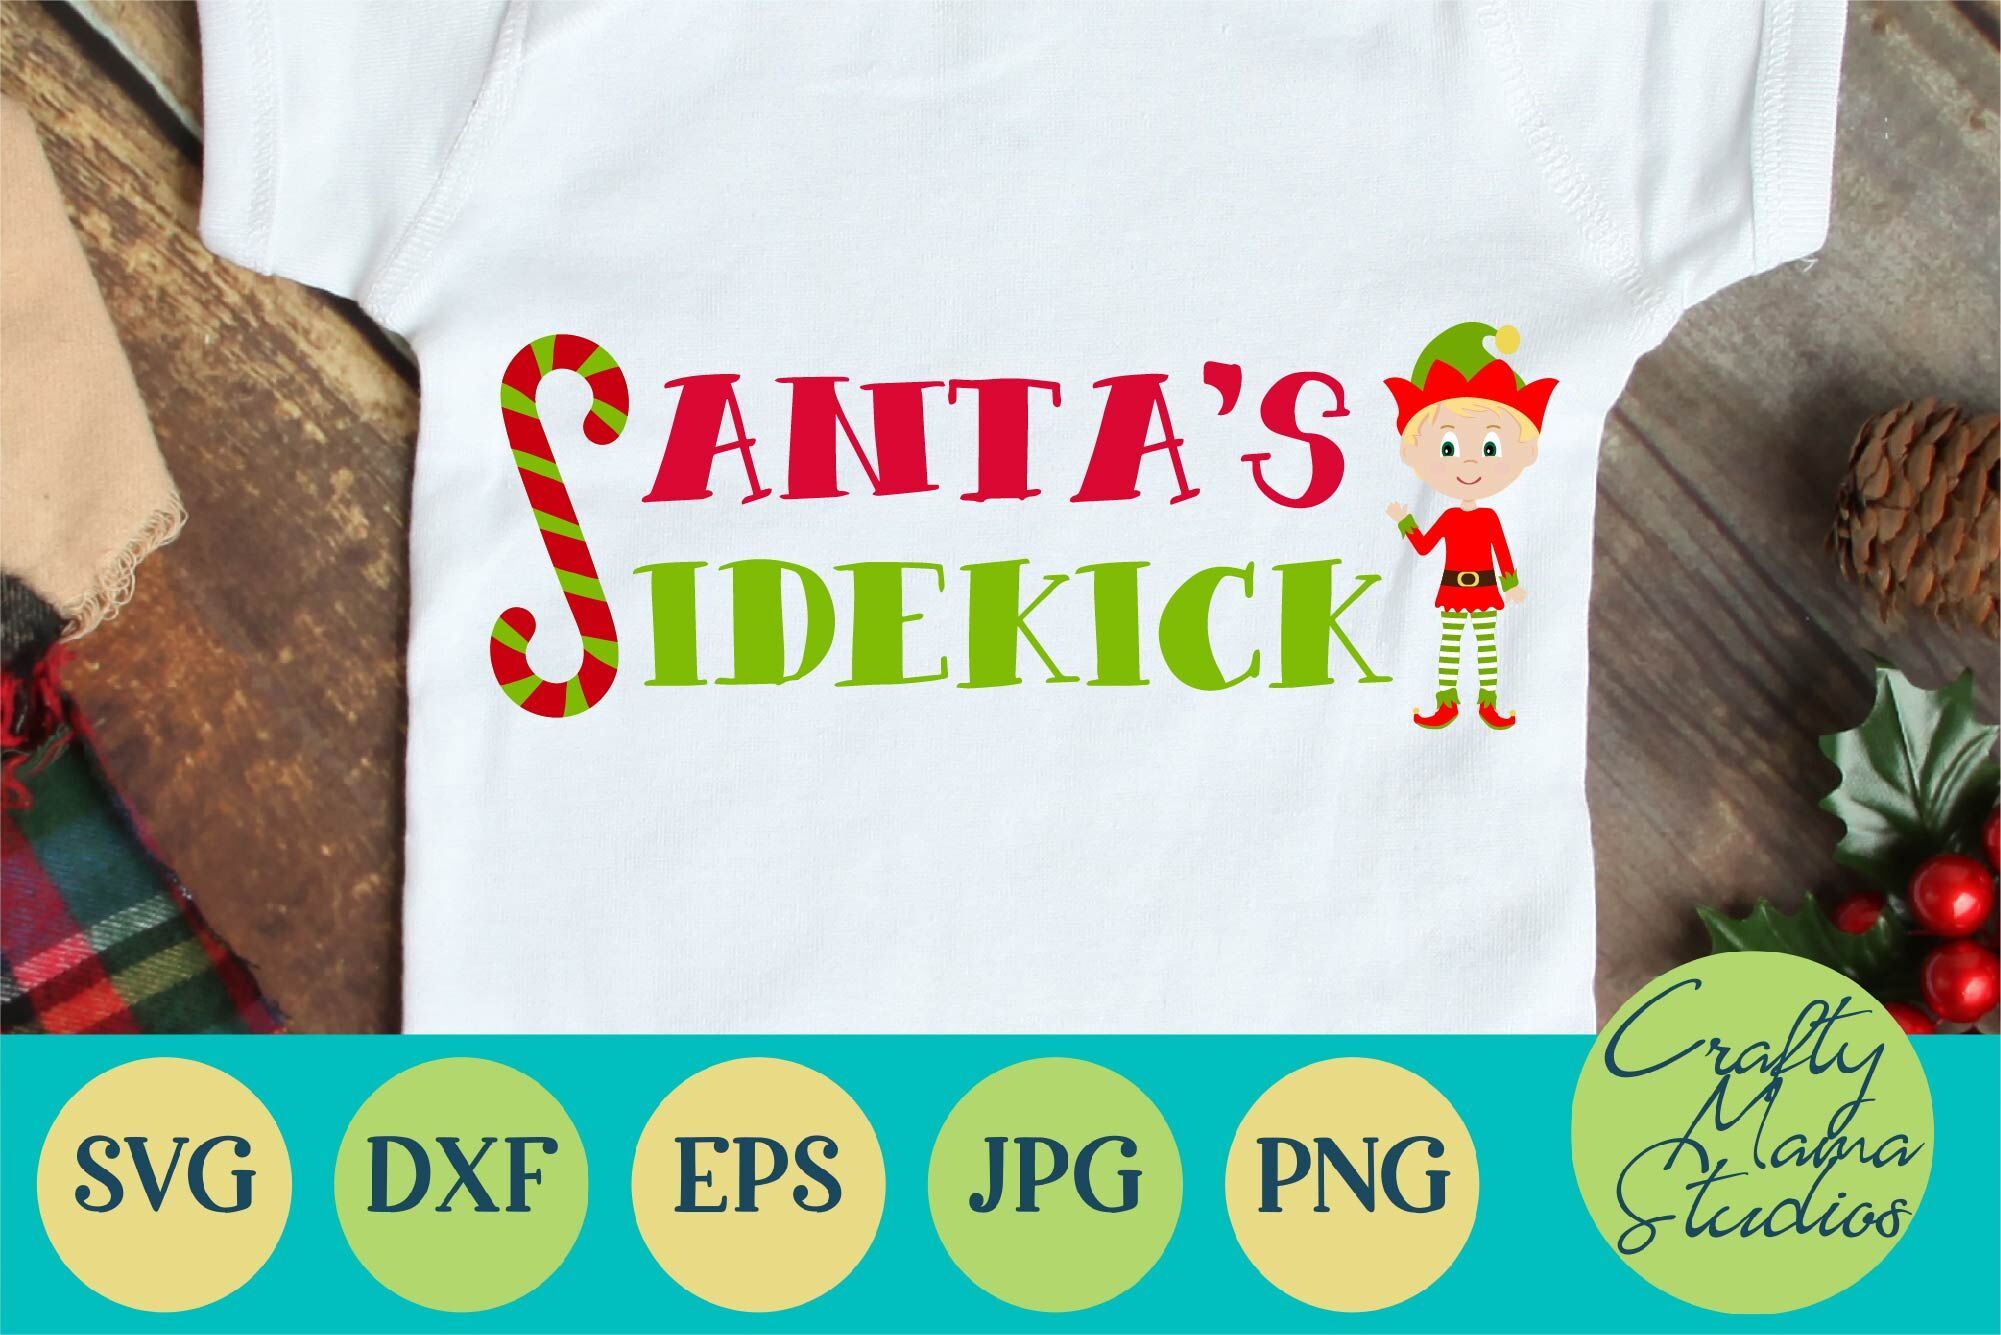 Santa S Sidekick Svg Kid S Christmas Svg By Crafty Mama Studios Thehungryjpeg Com